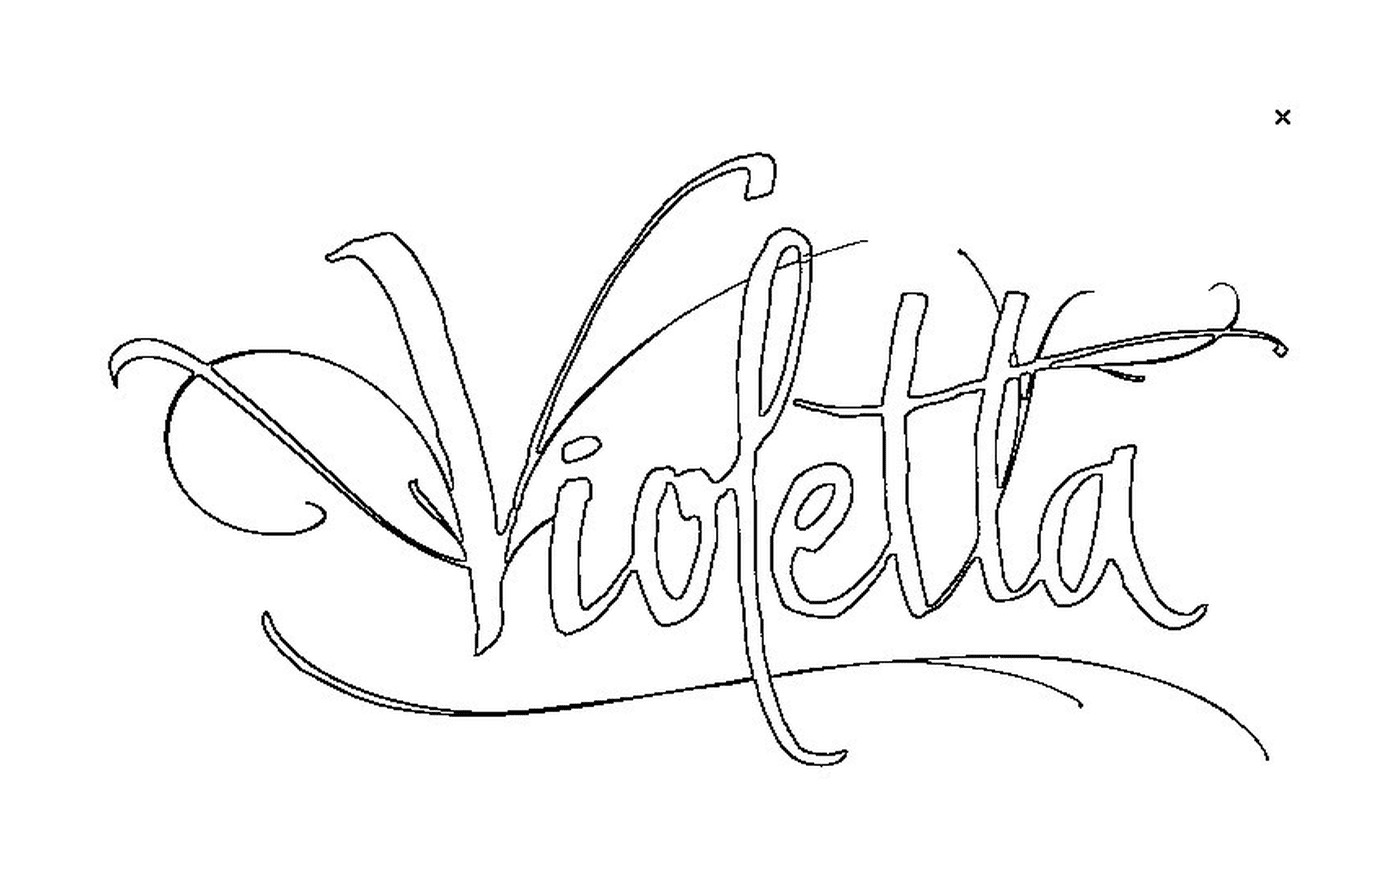  Violetta logo 